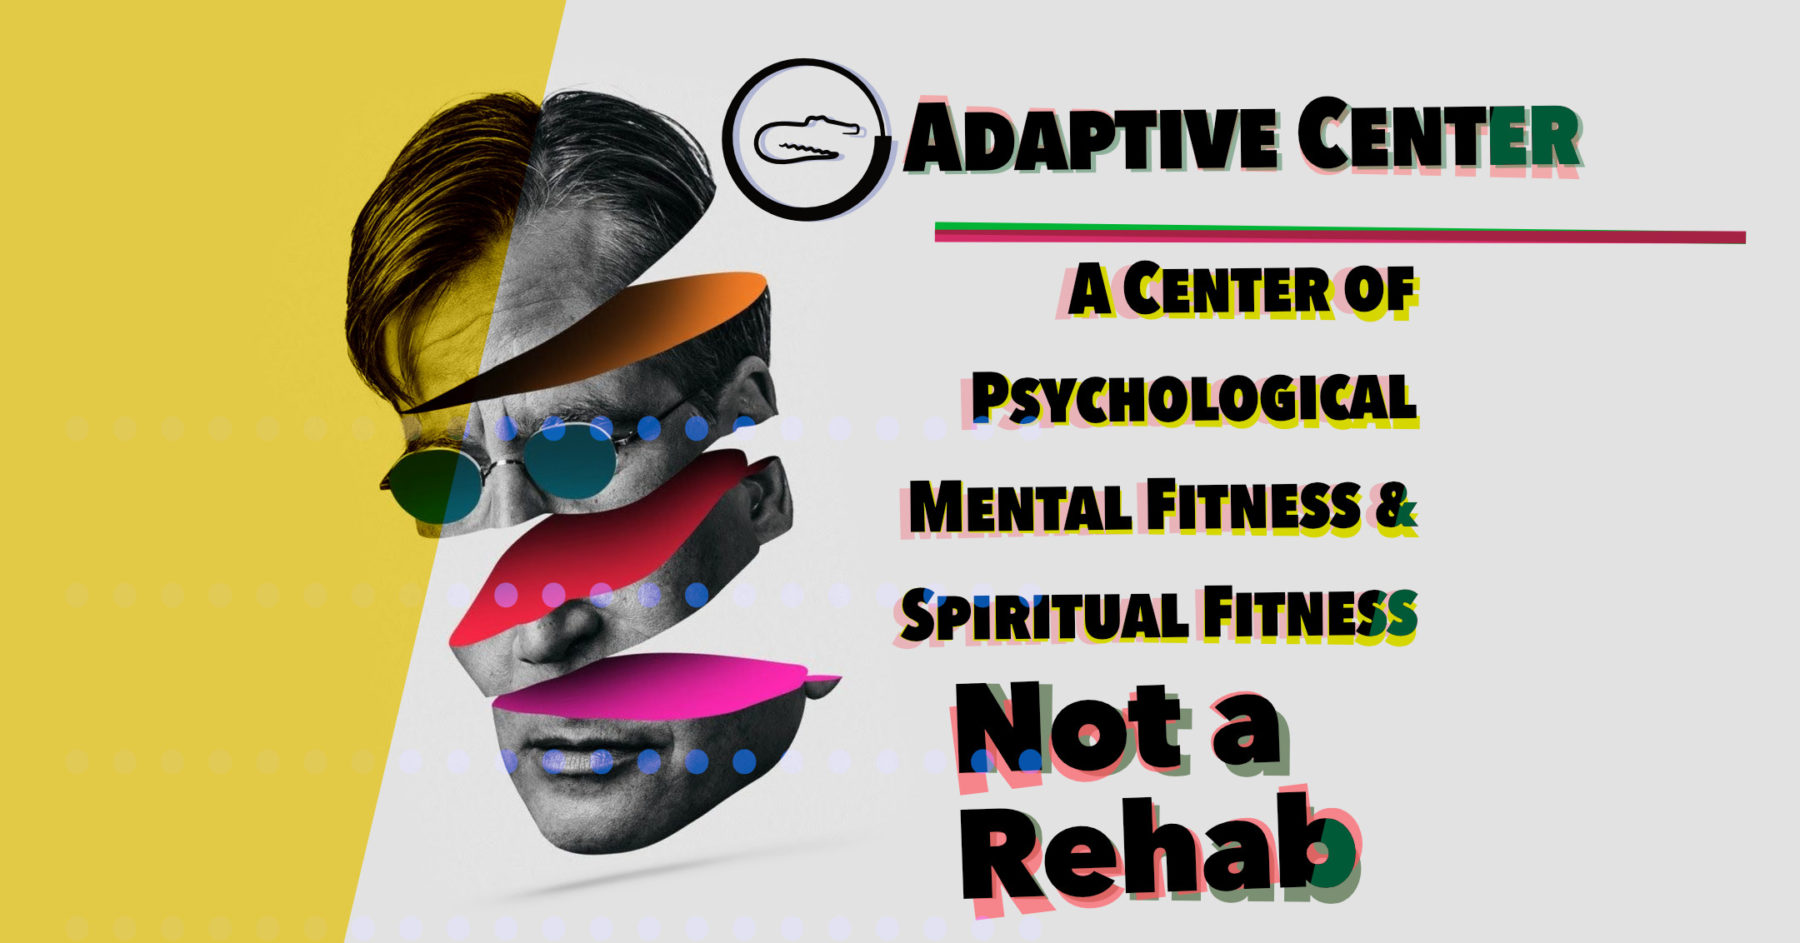 A Center of Psychological Mental Fitness & Spiritual Fitness